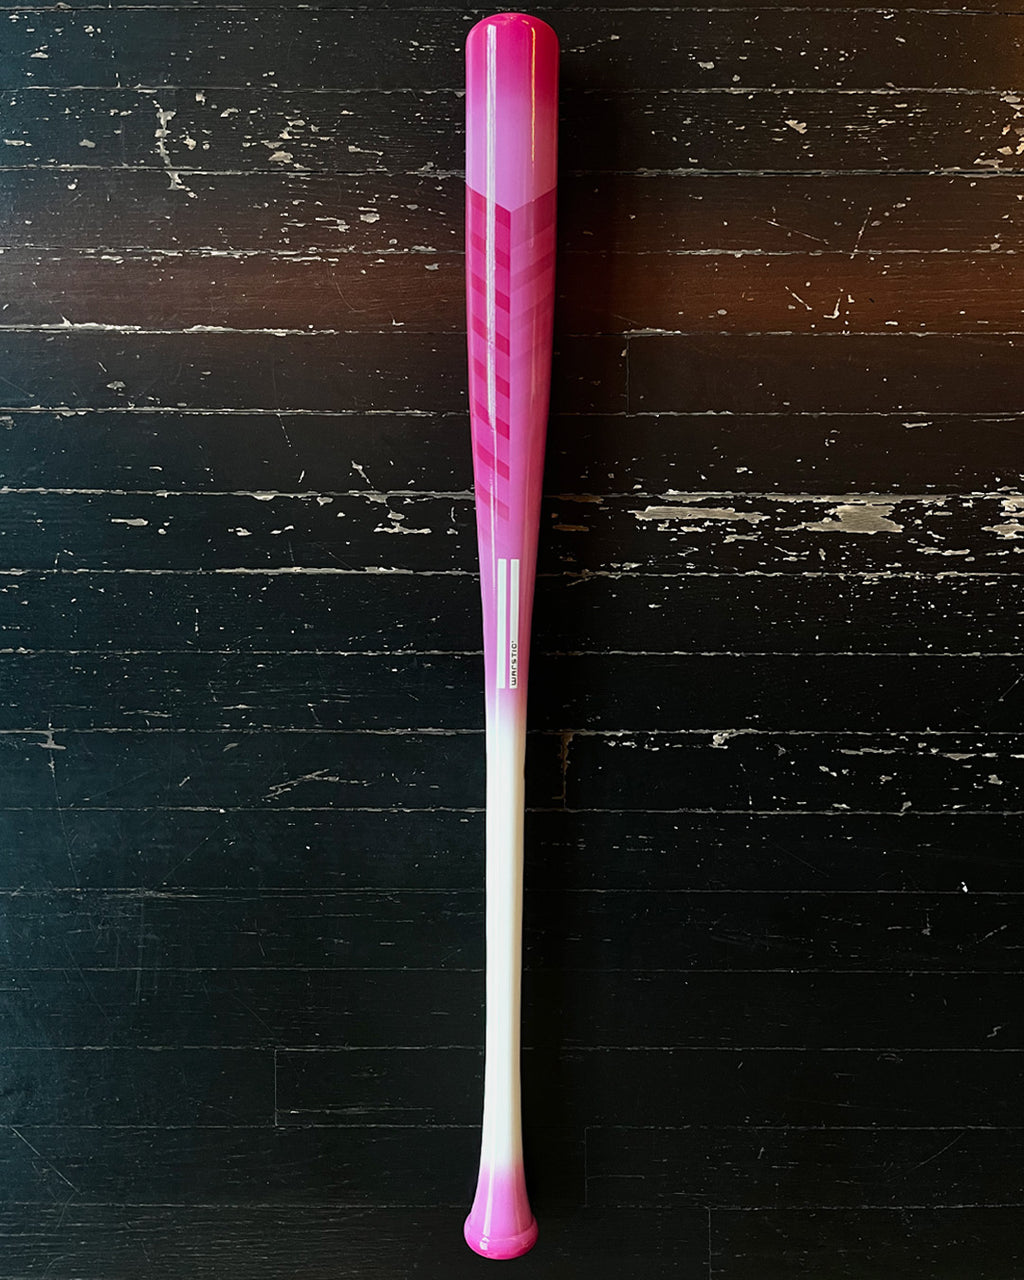 Louisville Slugger making pink bats for Mother's Day baseball games 